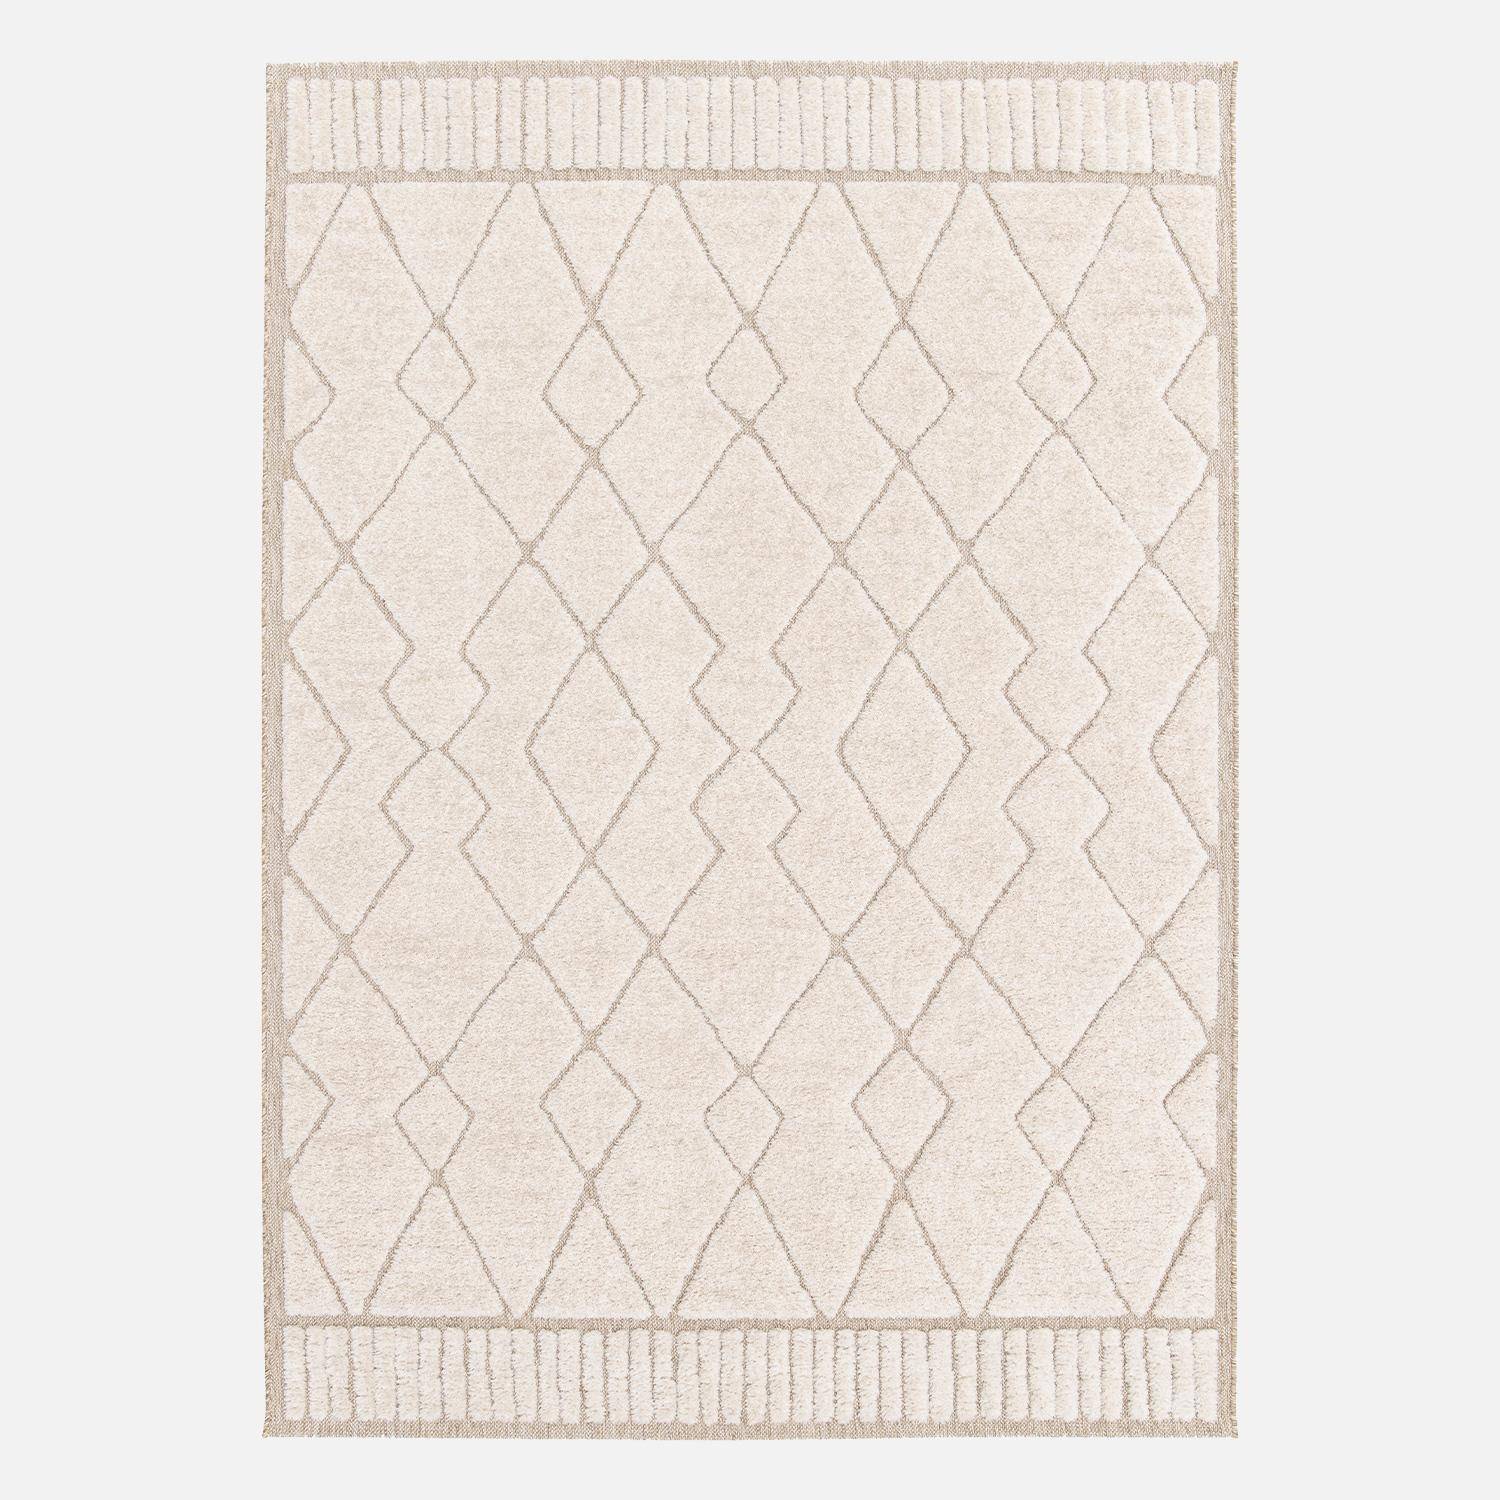 Interior carpet with Berber pattern, beige and cream, Judy, 120 x 170 cm Photo1